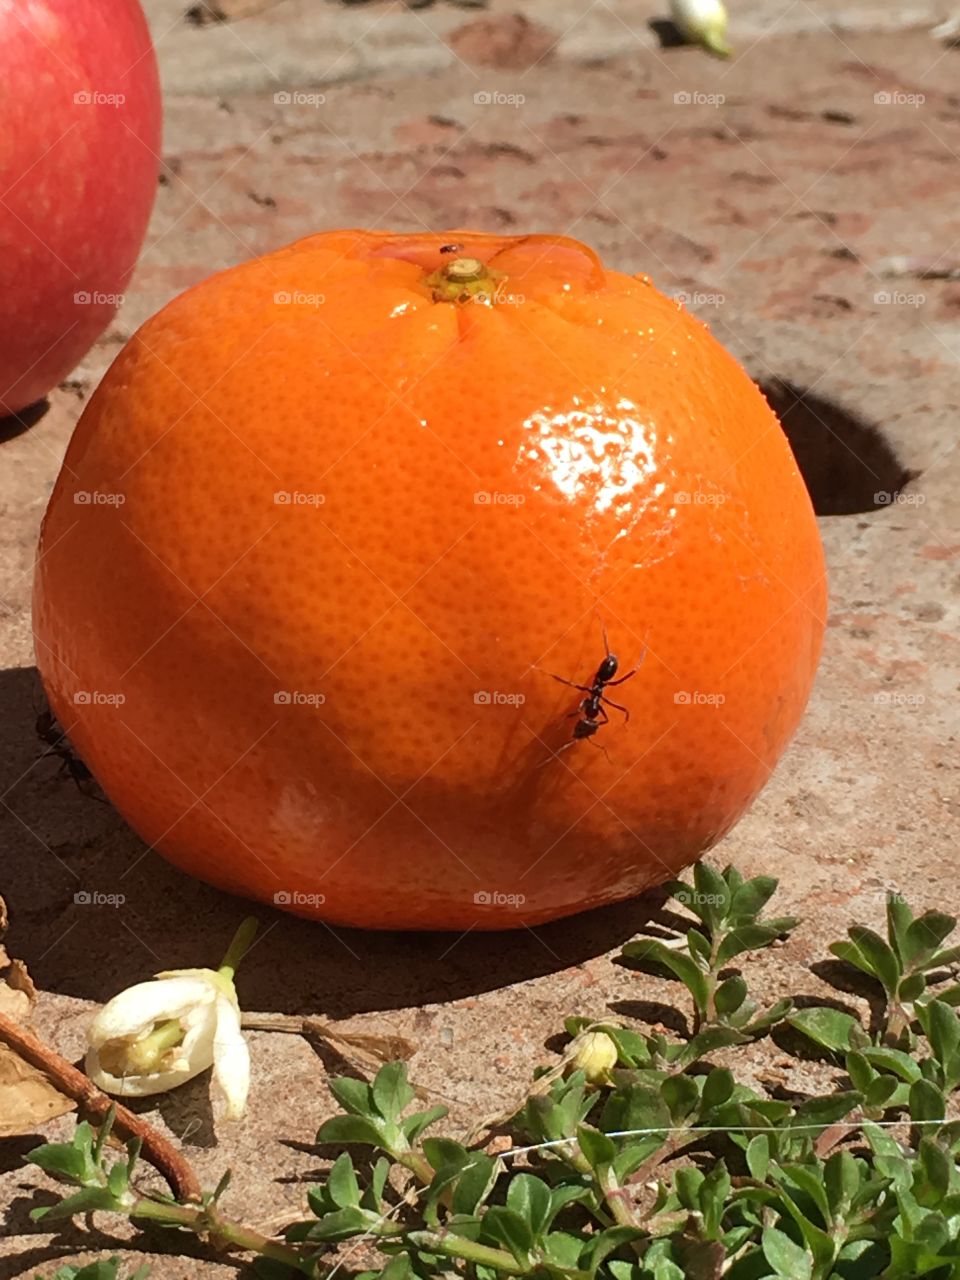 Worker ant crawling along a single orange closeup